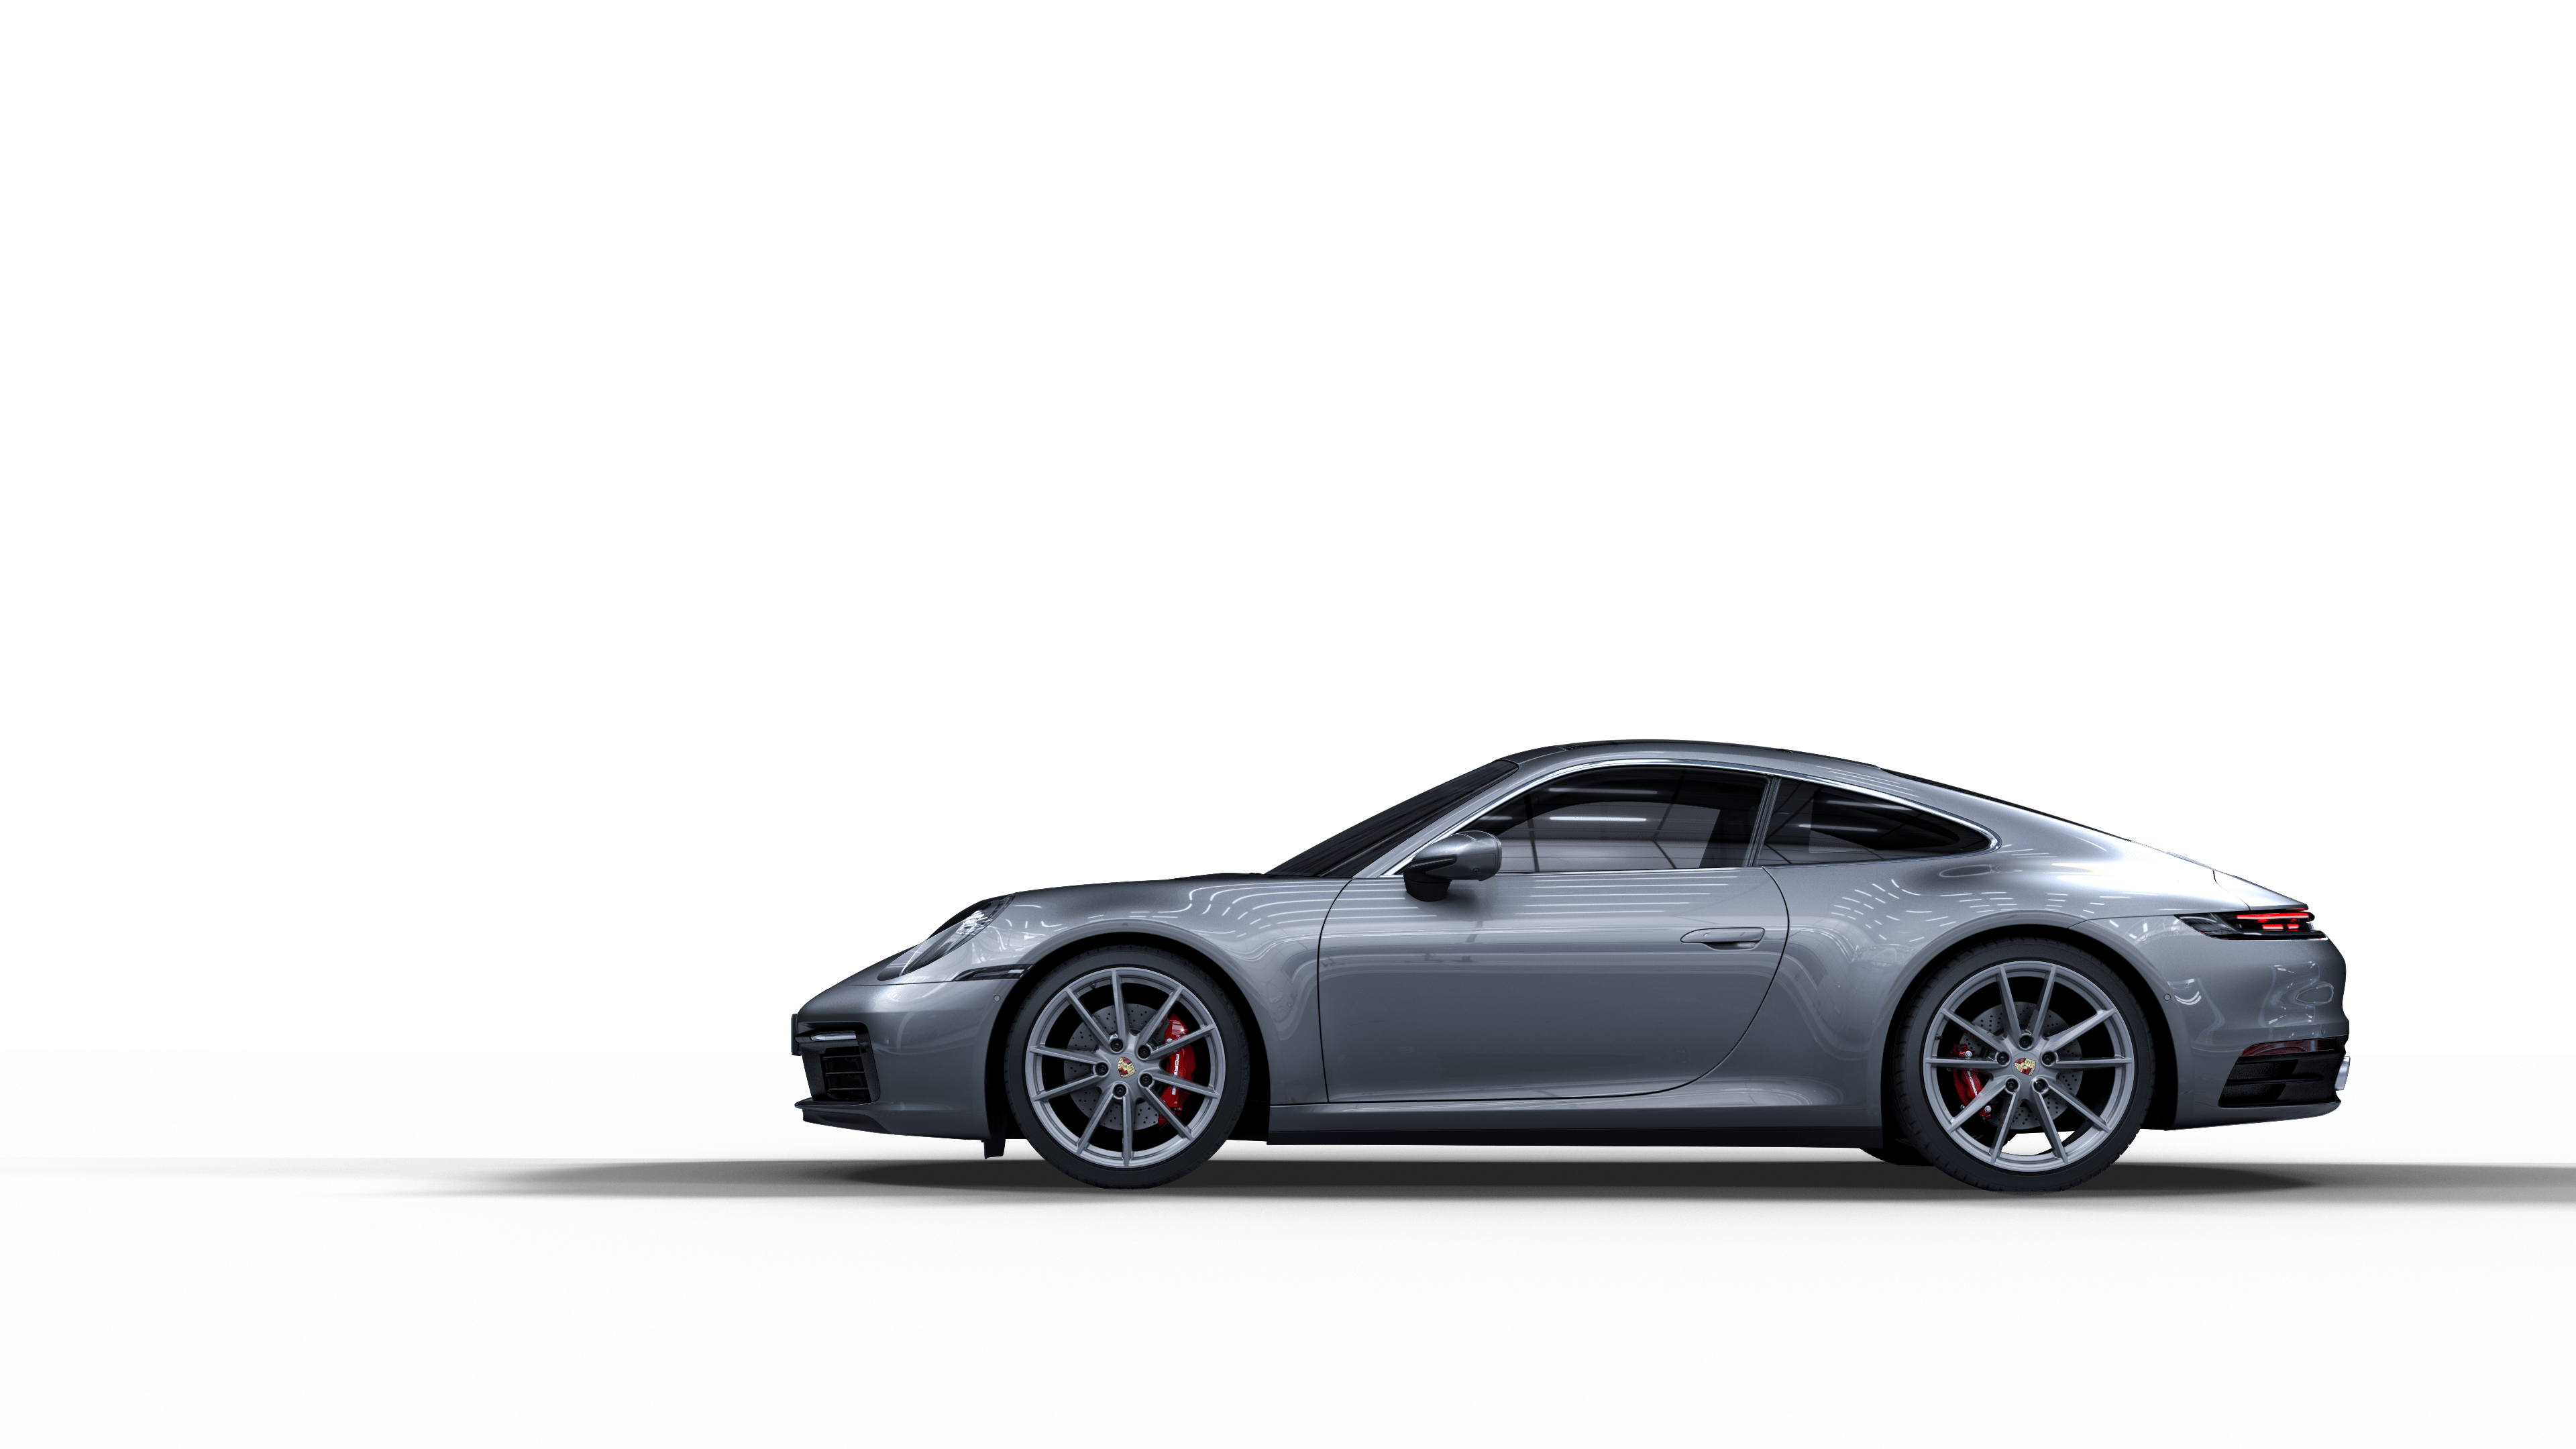 911 Porsche Background PNG Image